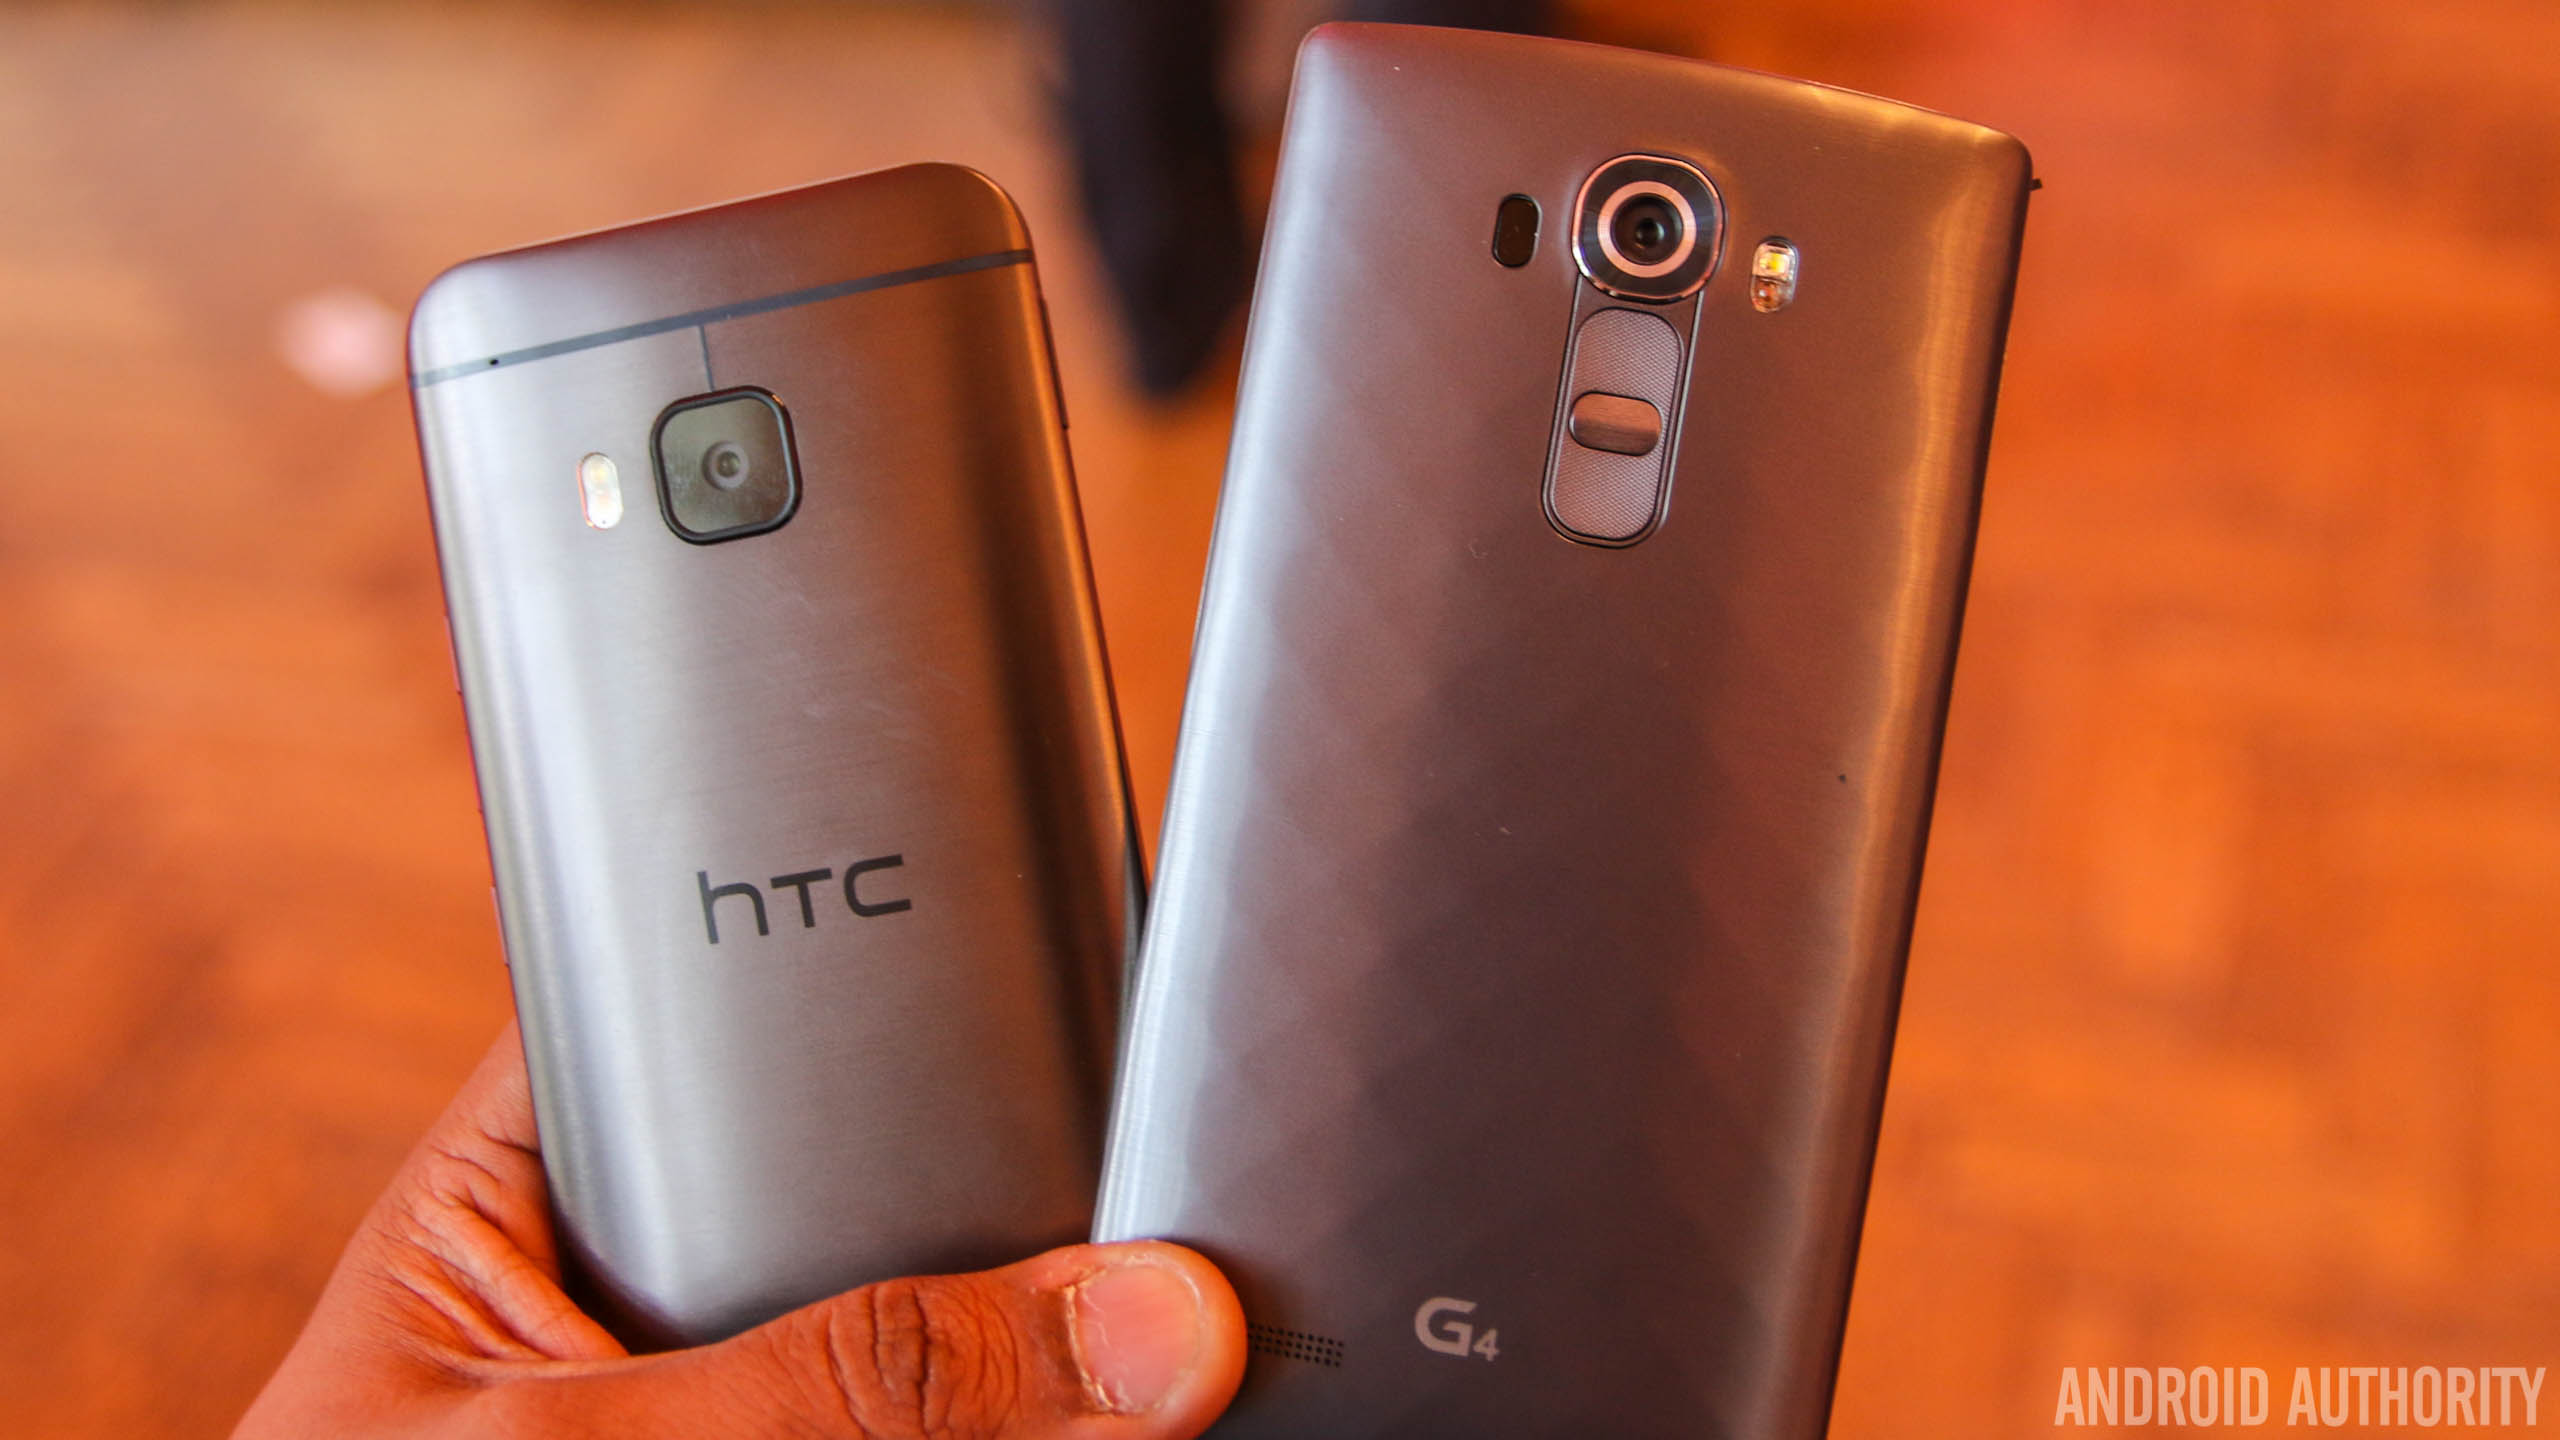 LG-G4-vs-HTC-One-M9-11